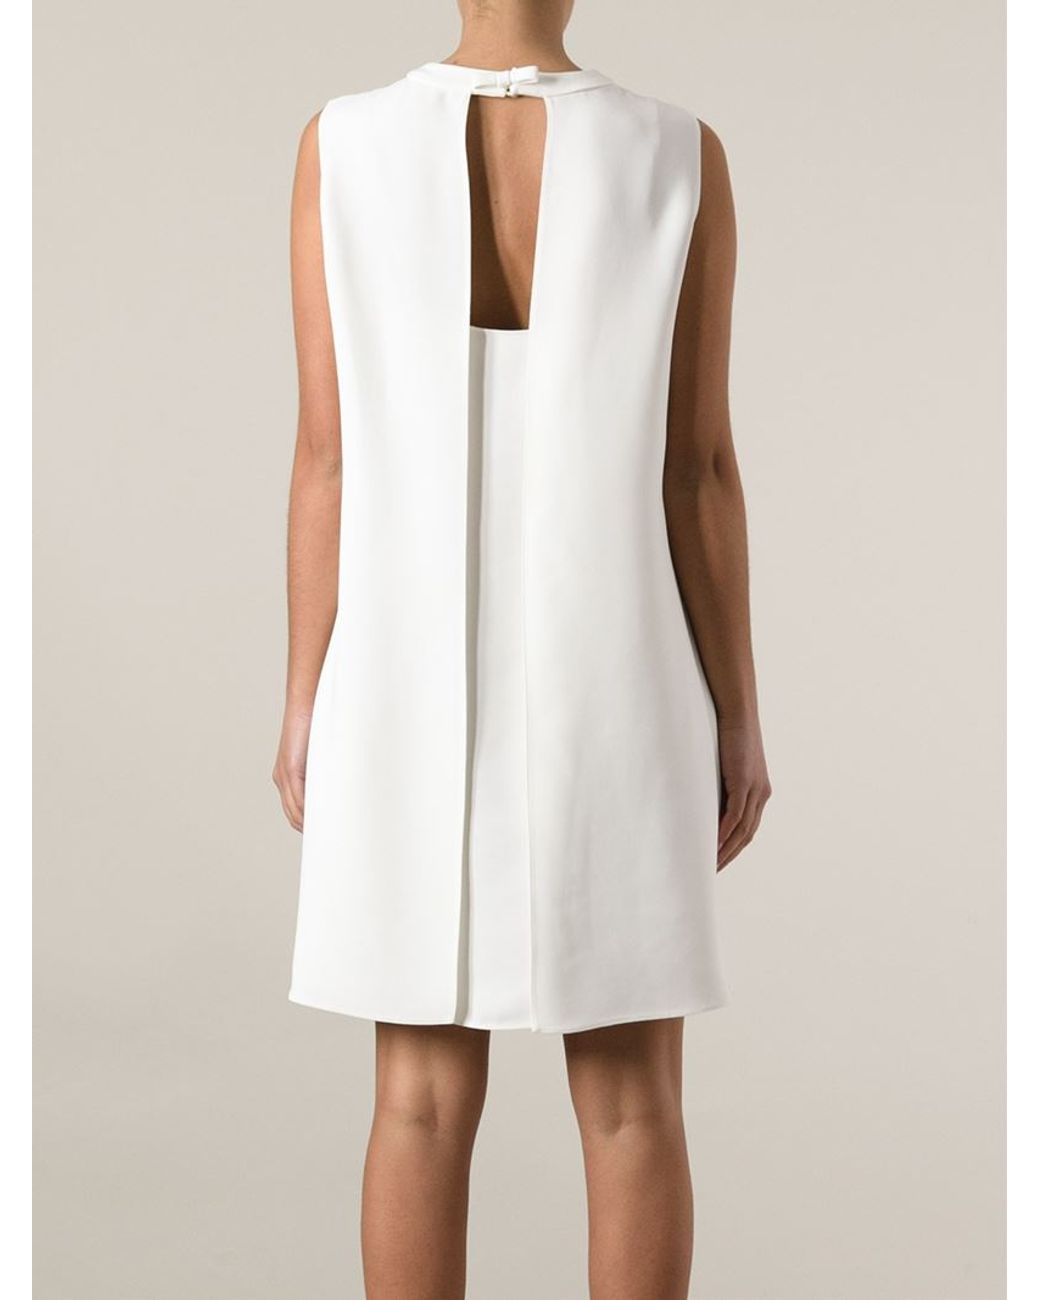 Valentino Sleeveless Shift Dress in White | Lyst